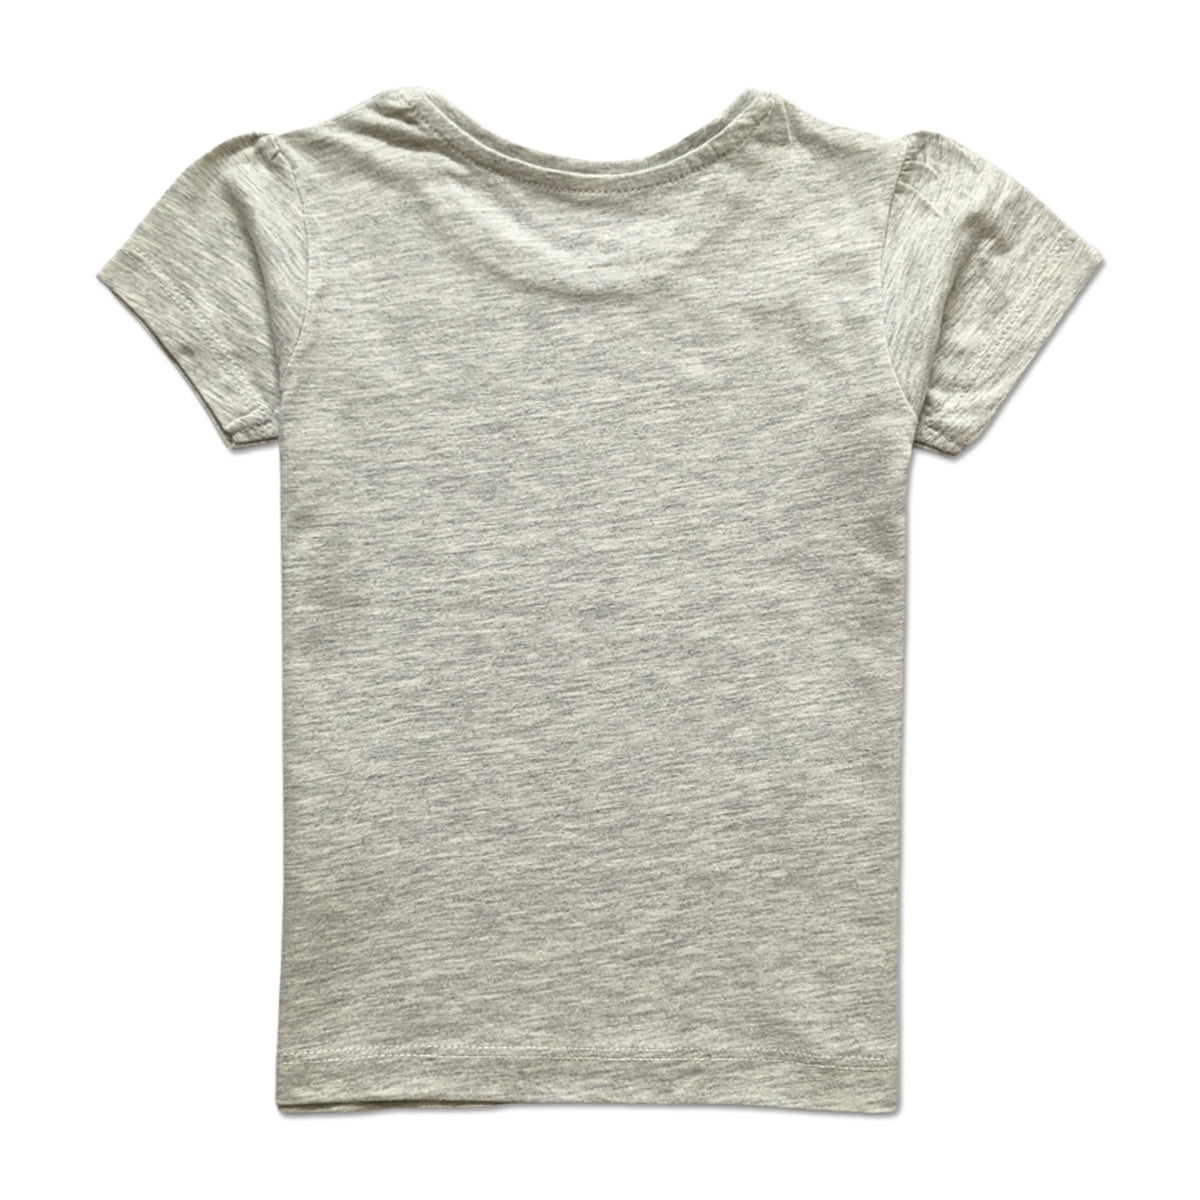 Brand Expo Premium Quality Branded Half Sleeves T-Shirt for Girl's